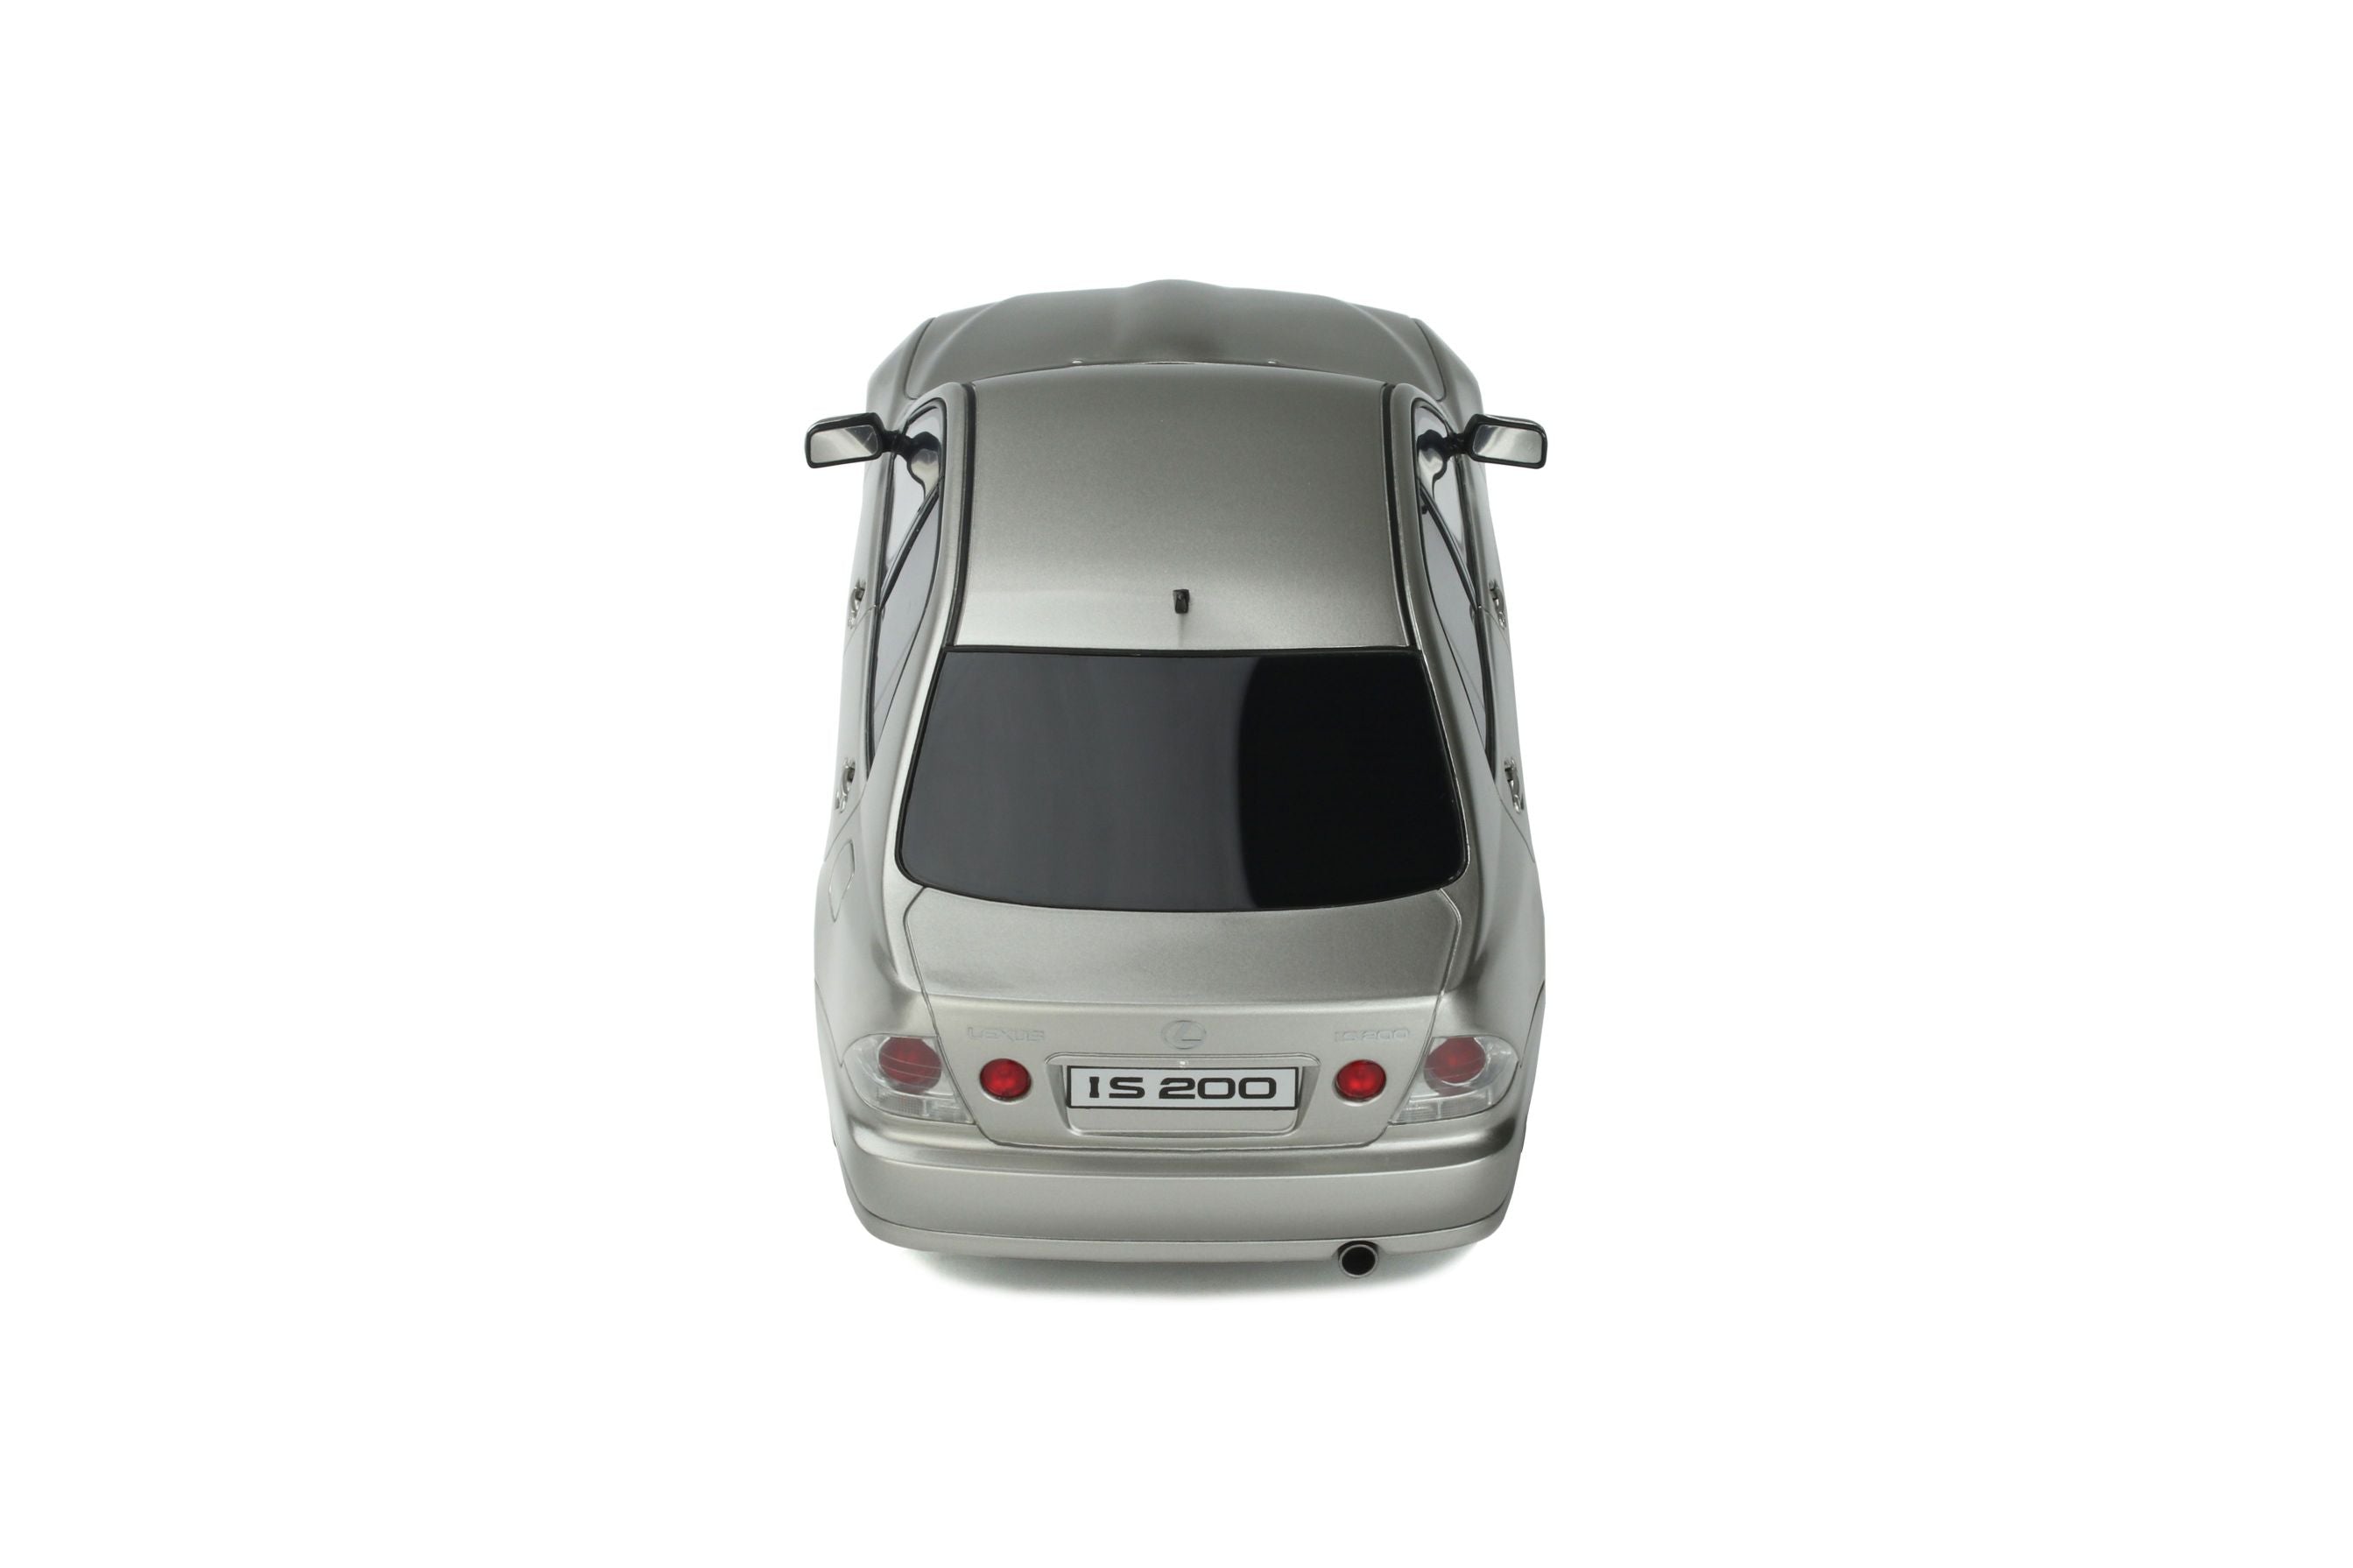 OttOmobile - Lexus IS200 (Millennium Silver Metallic) 1:18 Scale Model Car